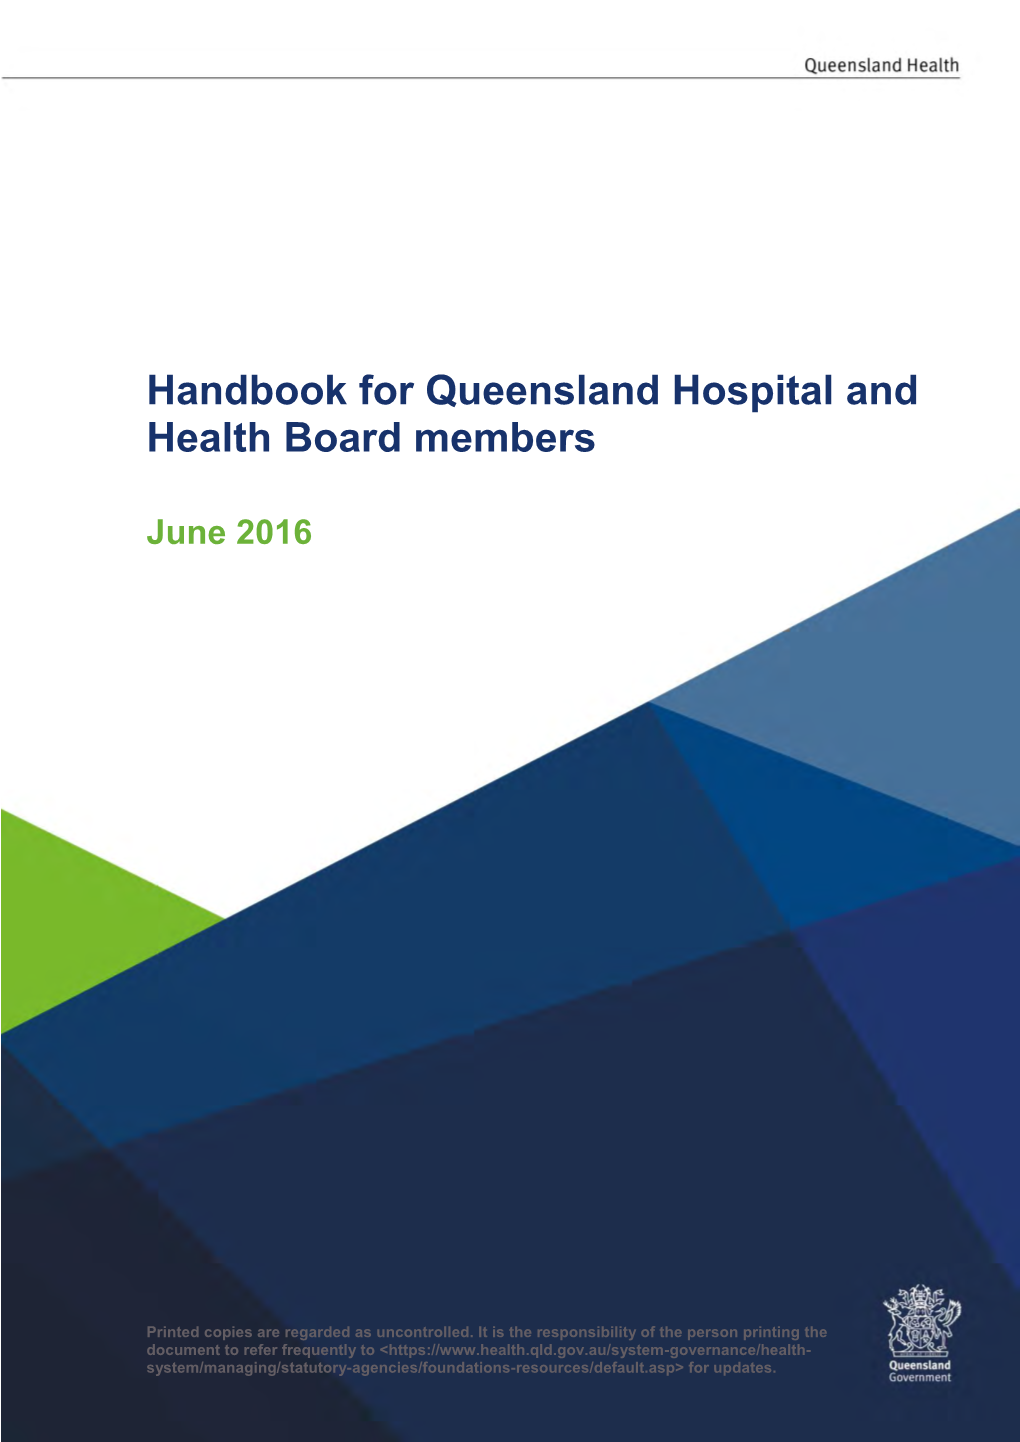 Handbook for Queensland Hospital and Health Board Members